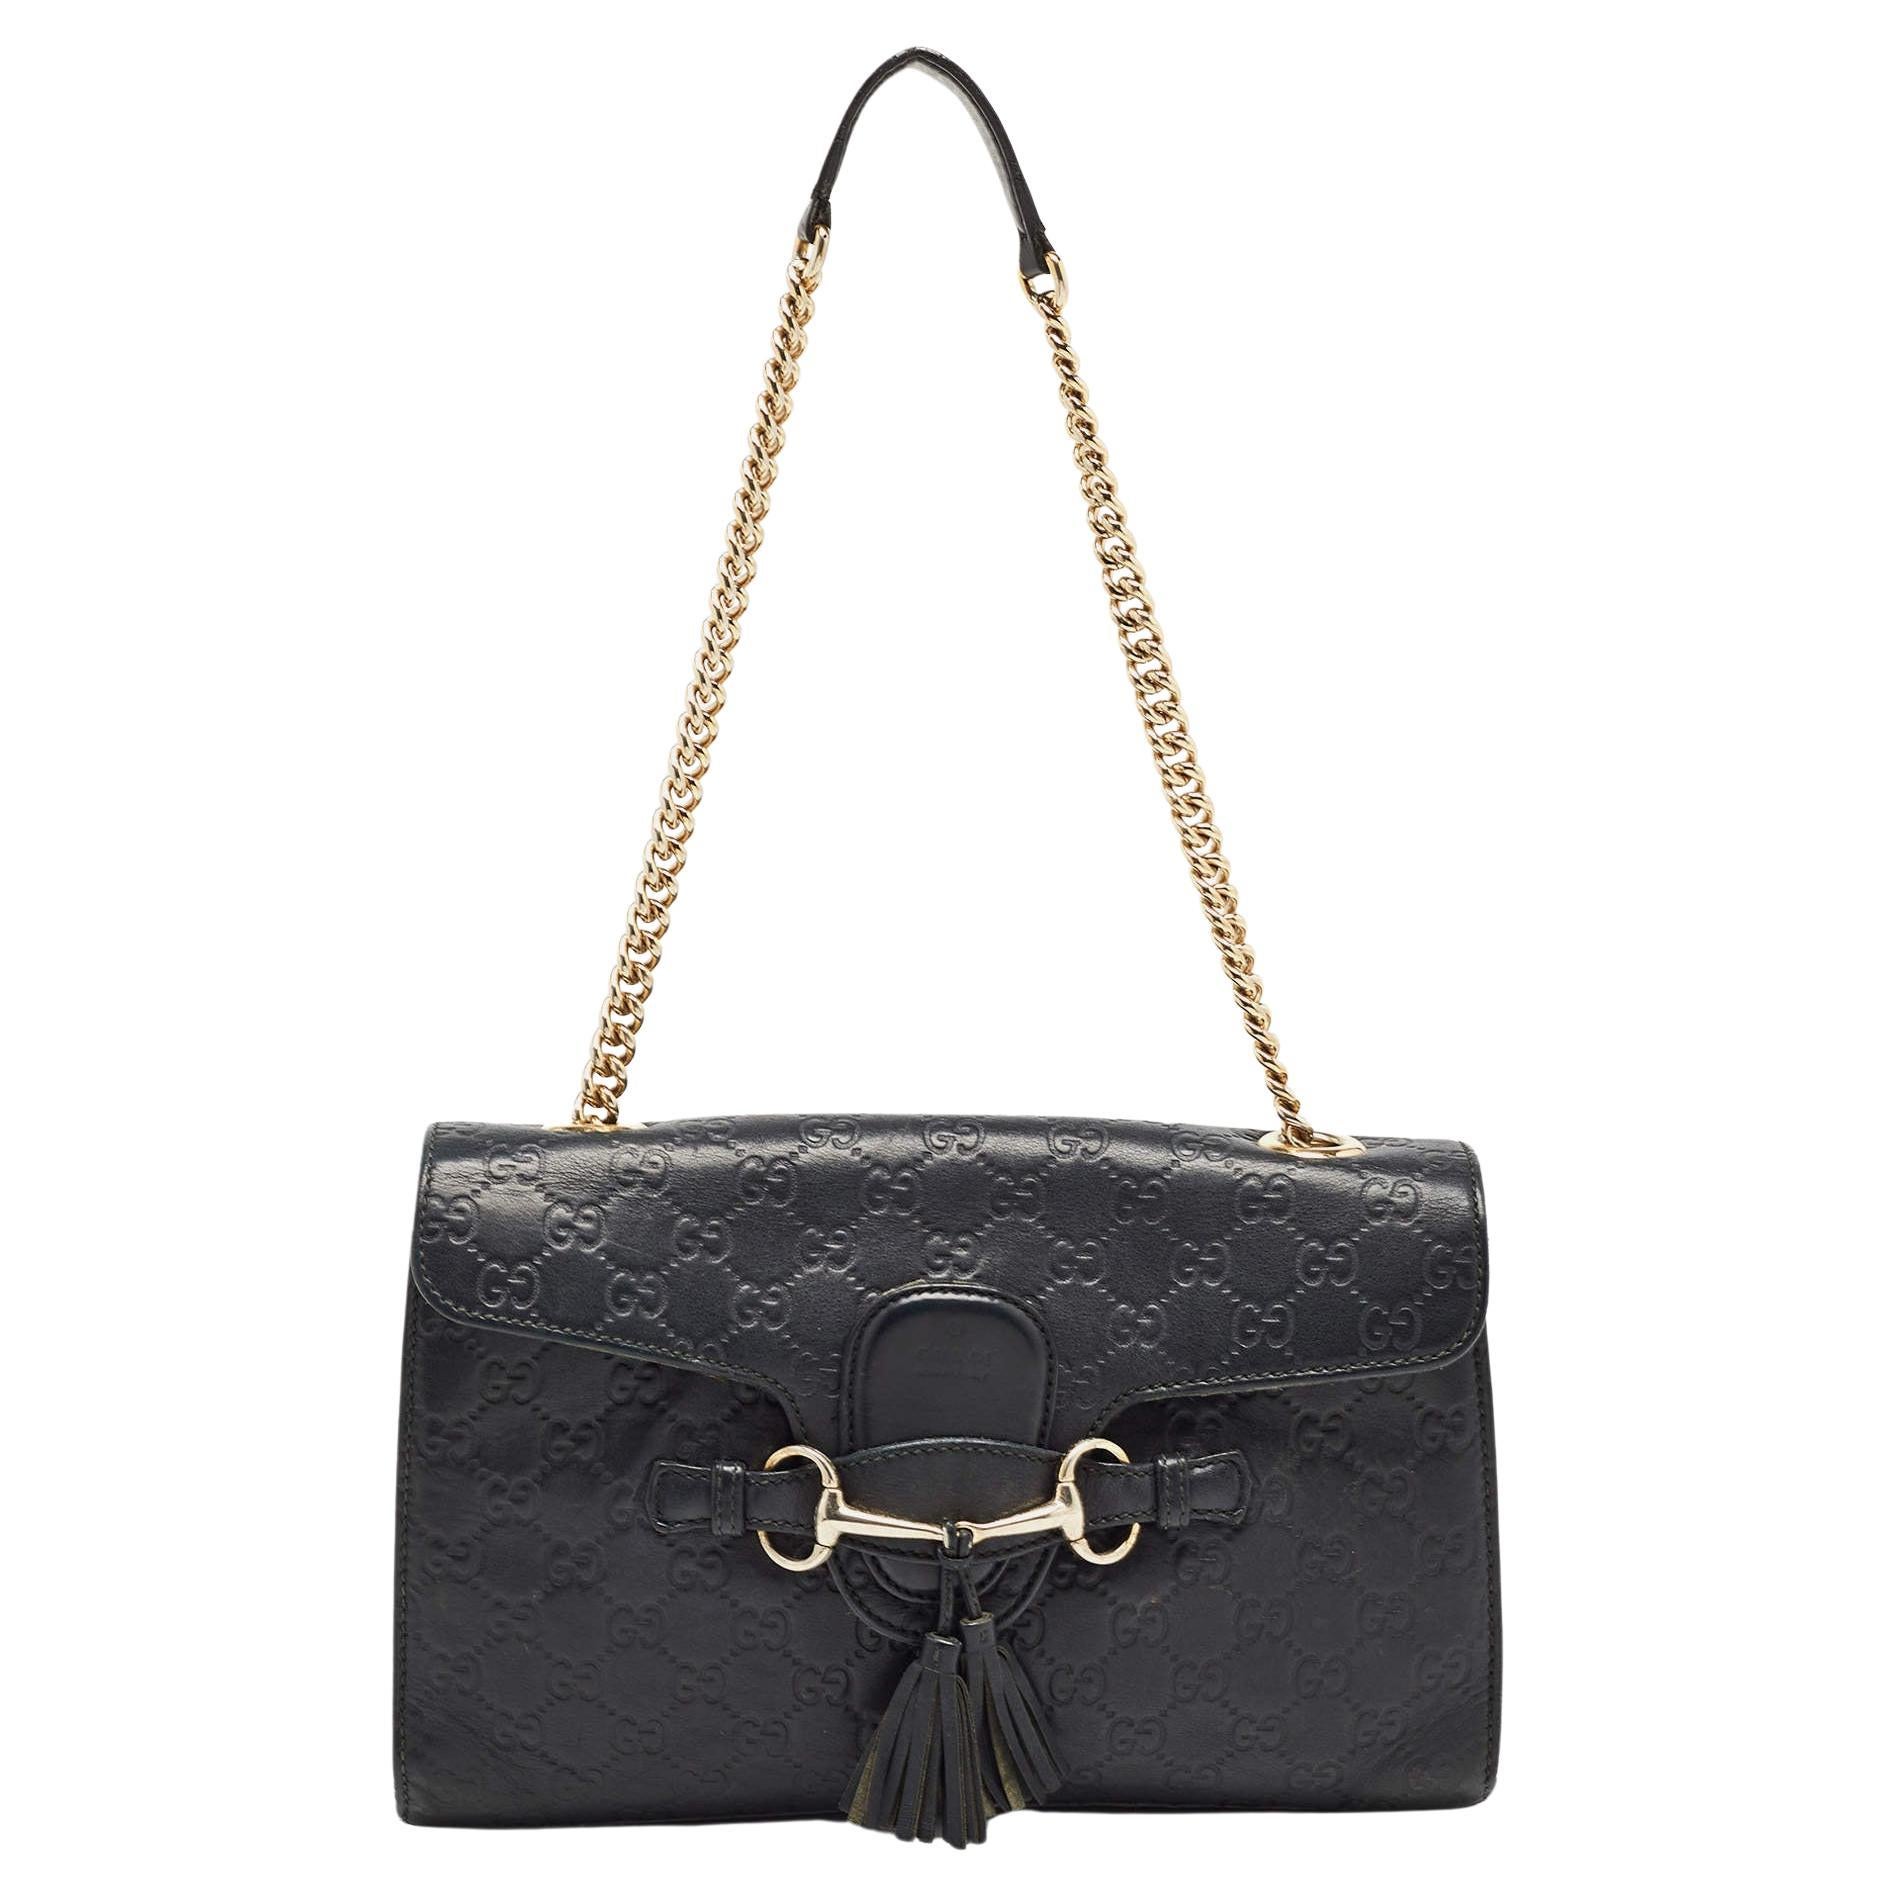 Gucci Black Guccisima Leather Medium Emily Shoulder Bag For Sale